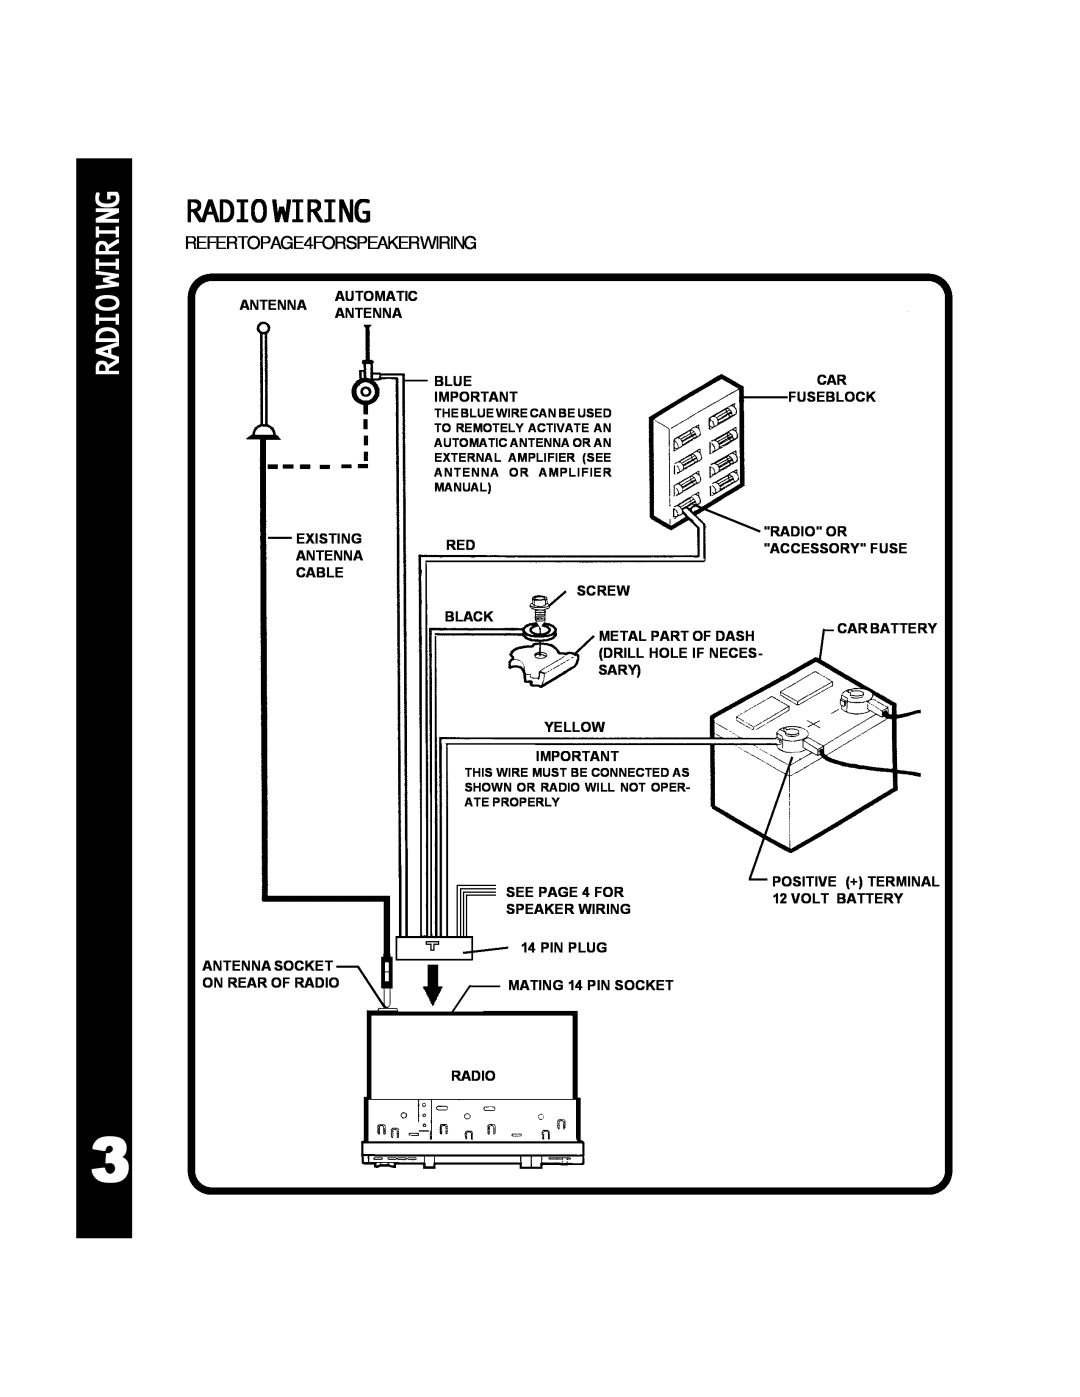 Audiovox ACD-25 manual Radiowiring 